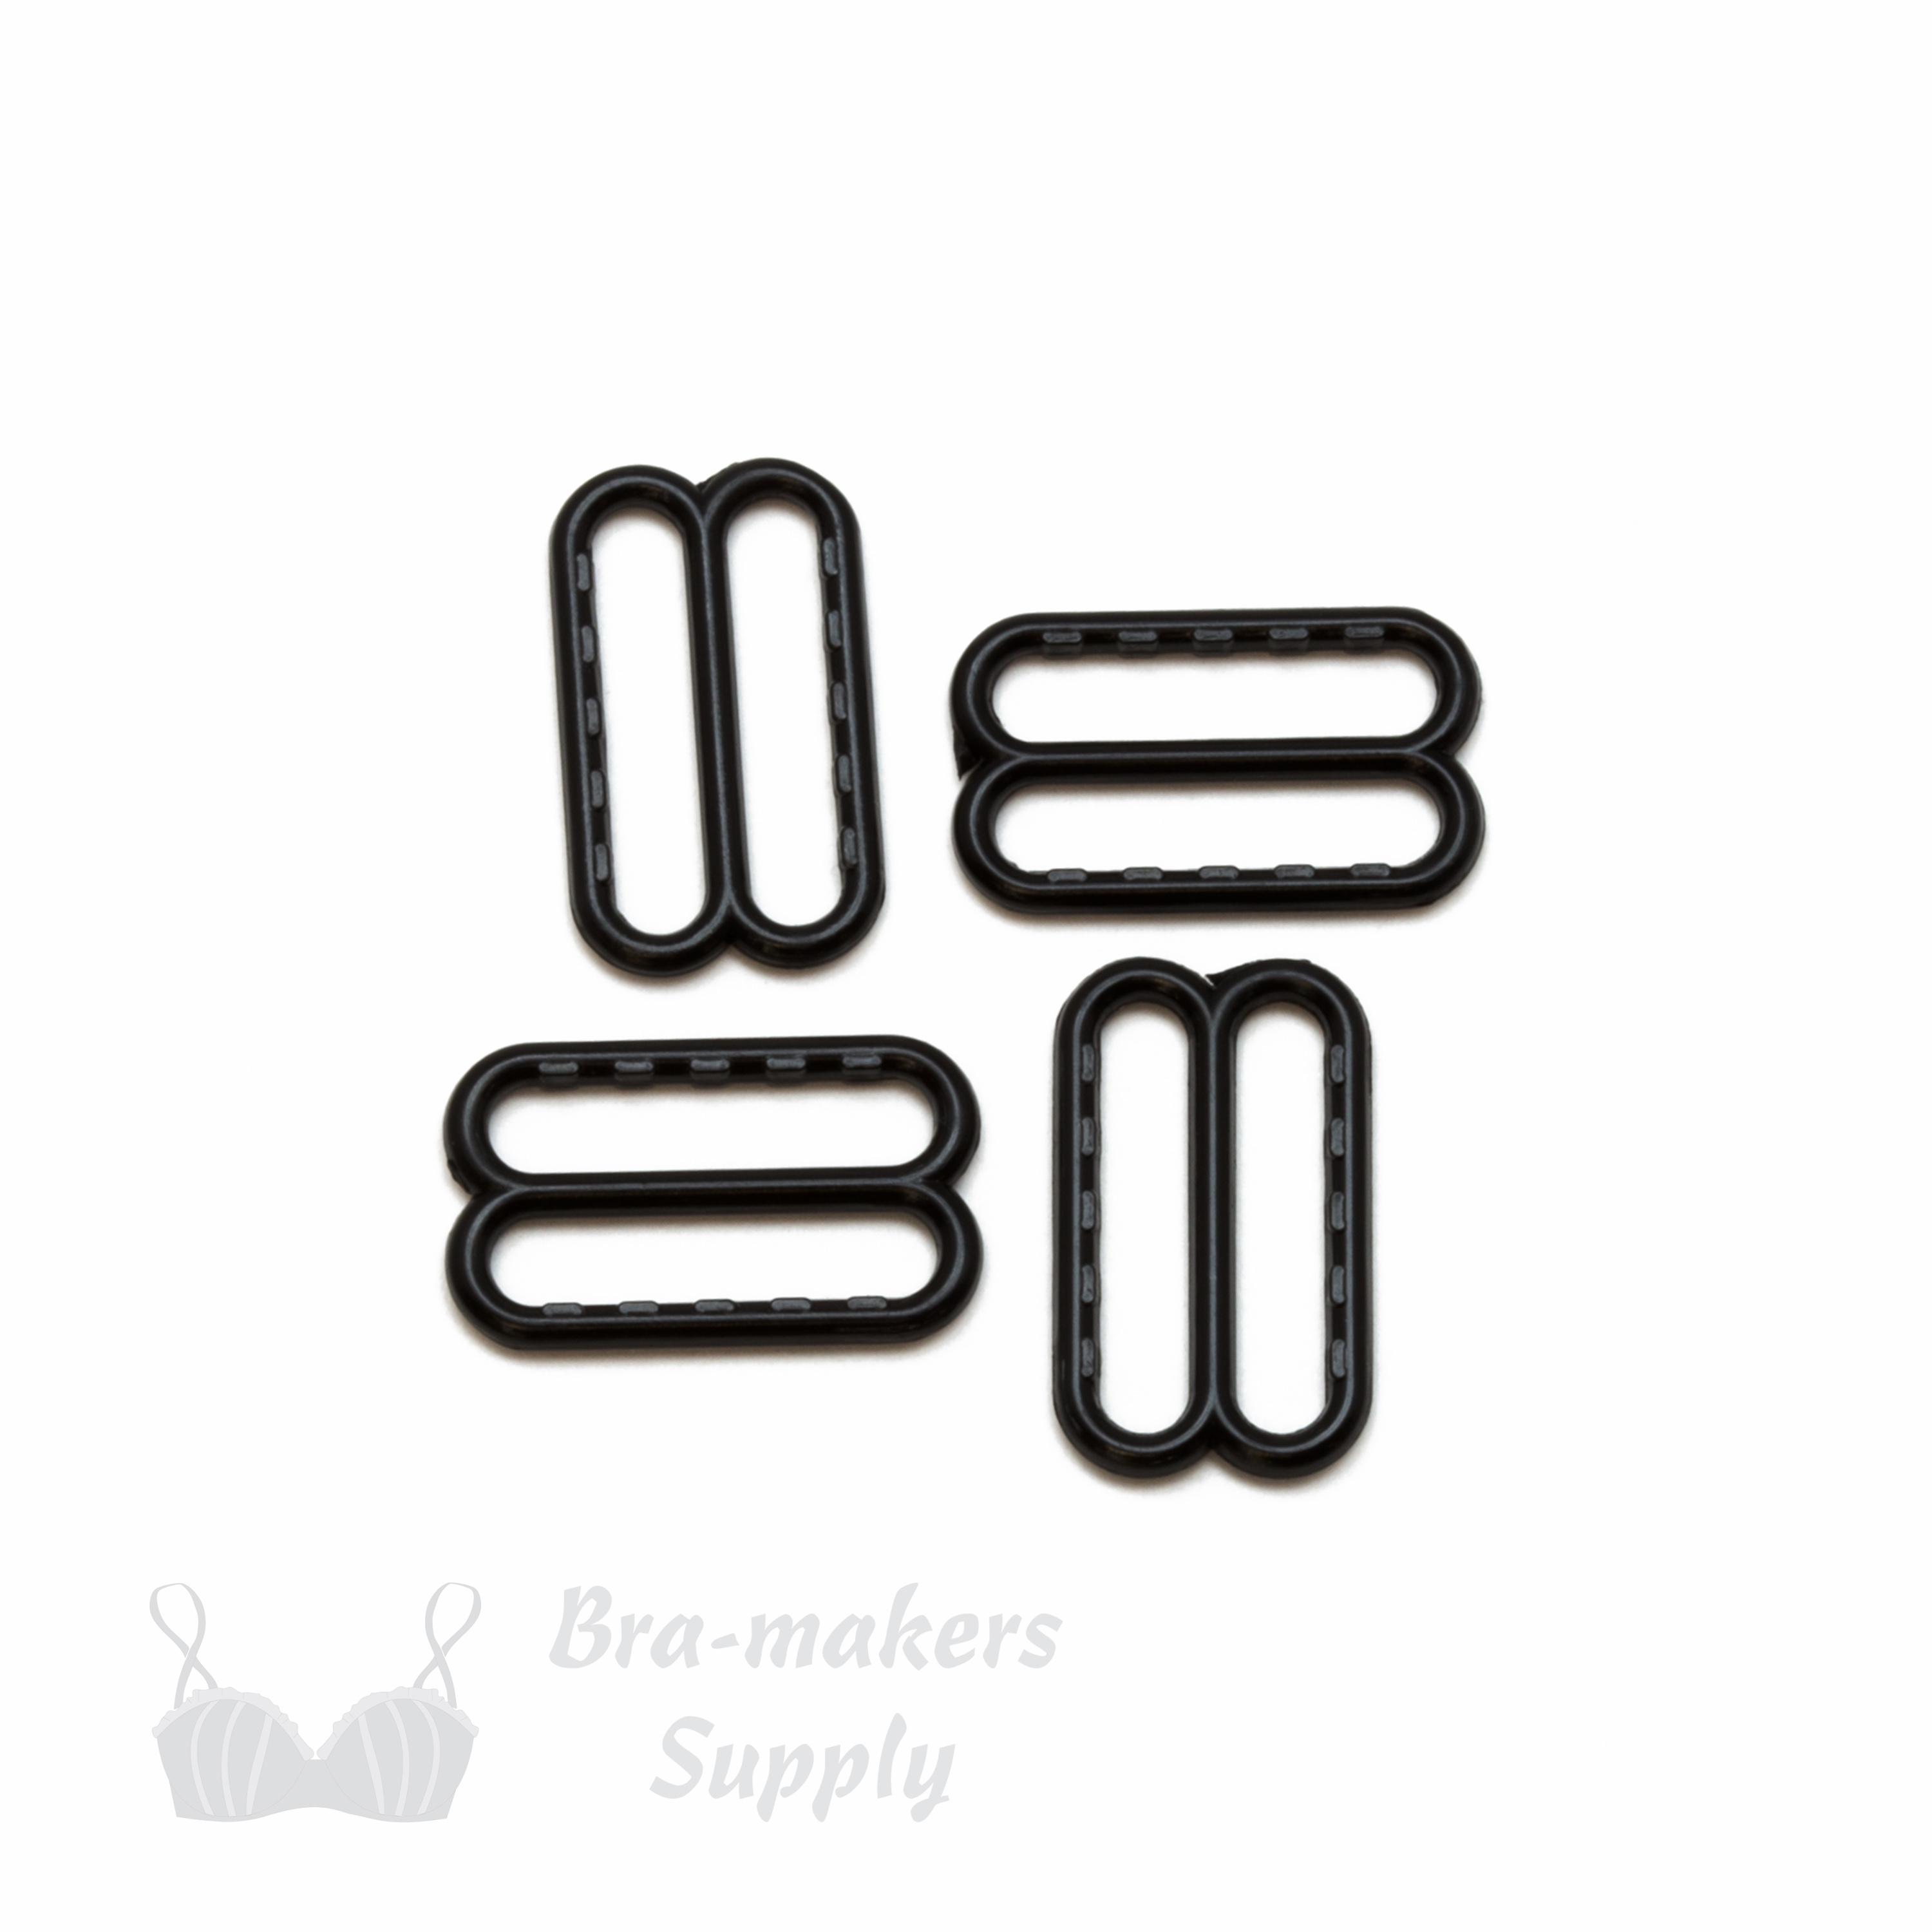 Bra Making Supplies - Metal Hardware - Rings and Sliders - Page 1